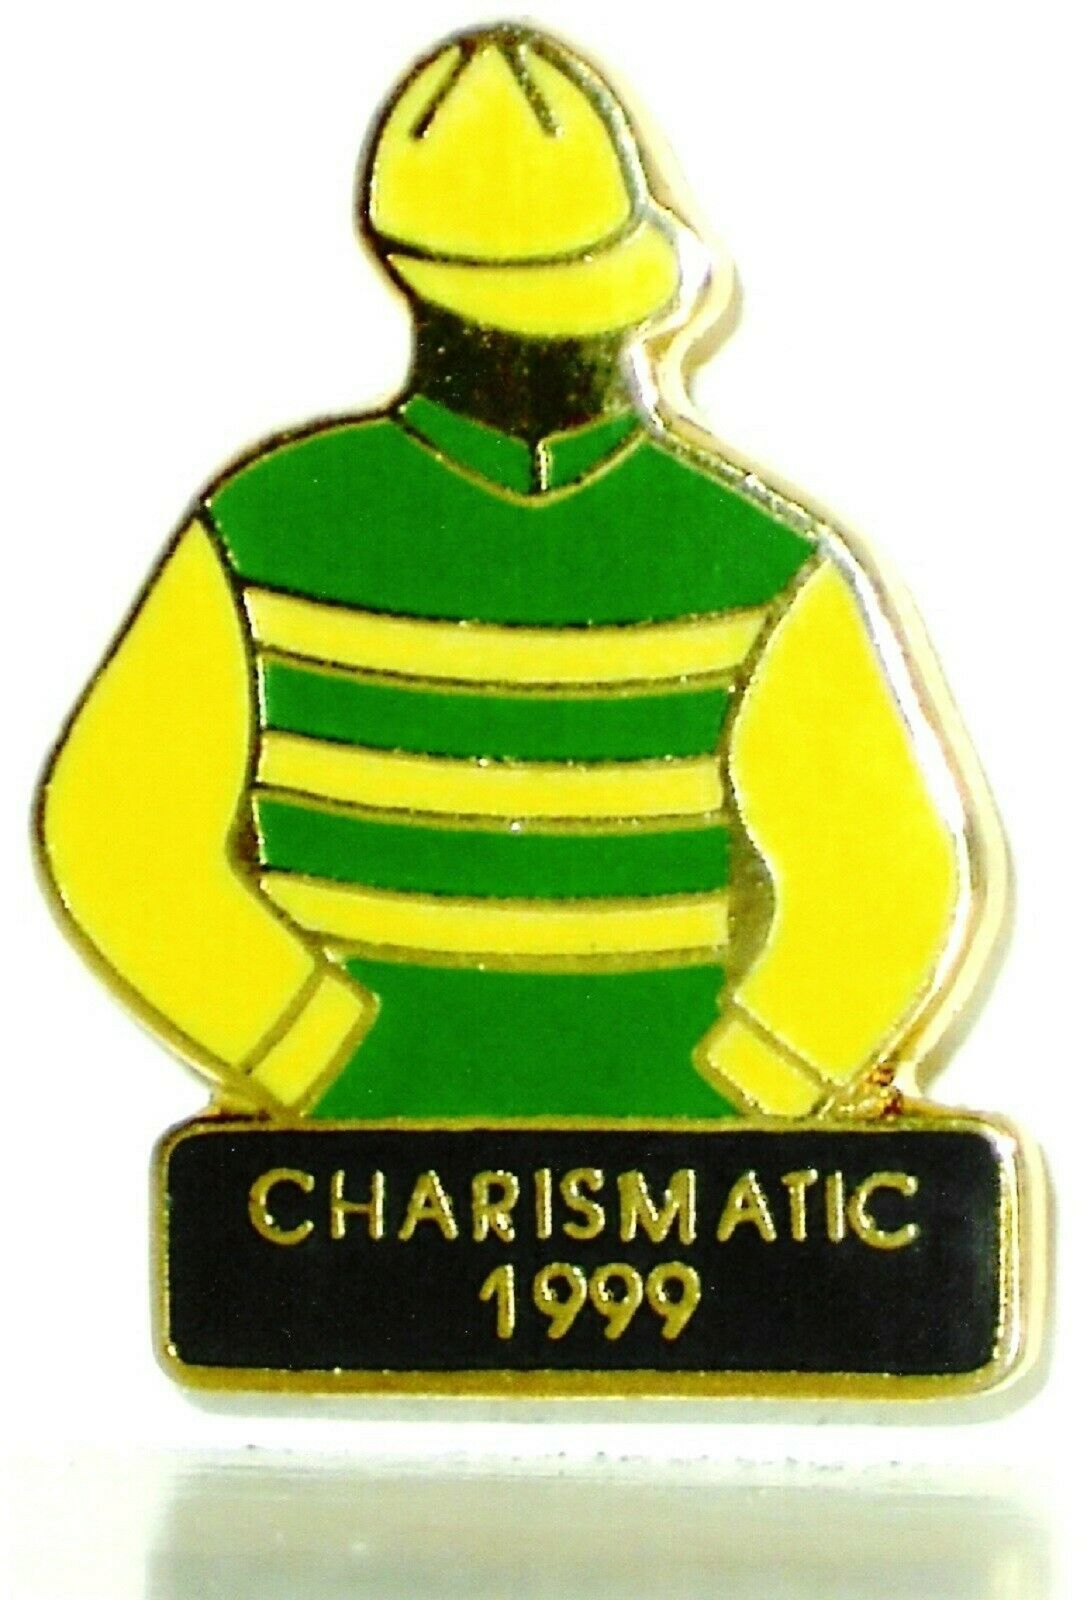 1999 CHARISMATIC Kentucky Derby Jockey Silks Pin Horse Racing